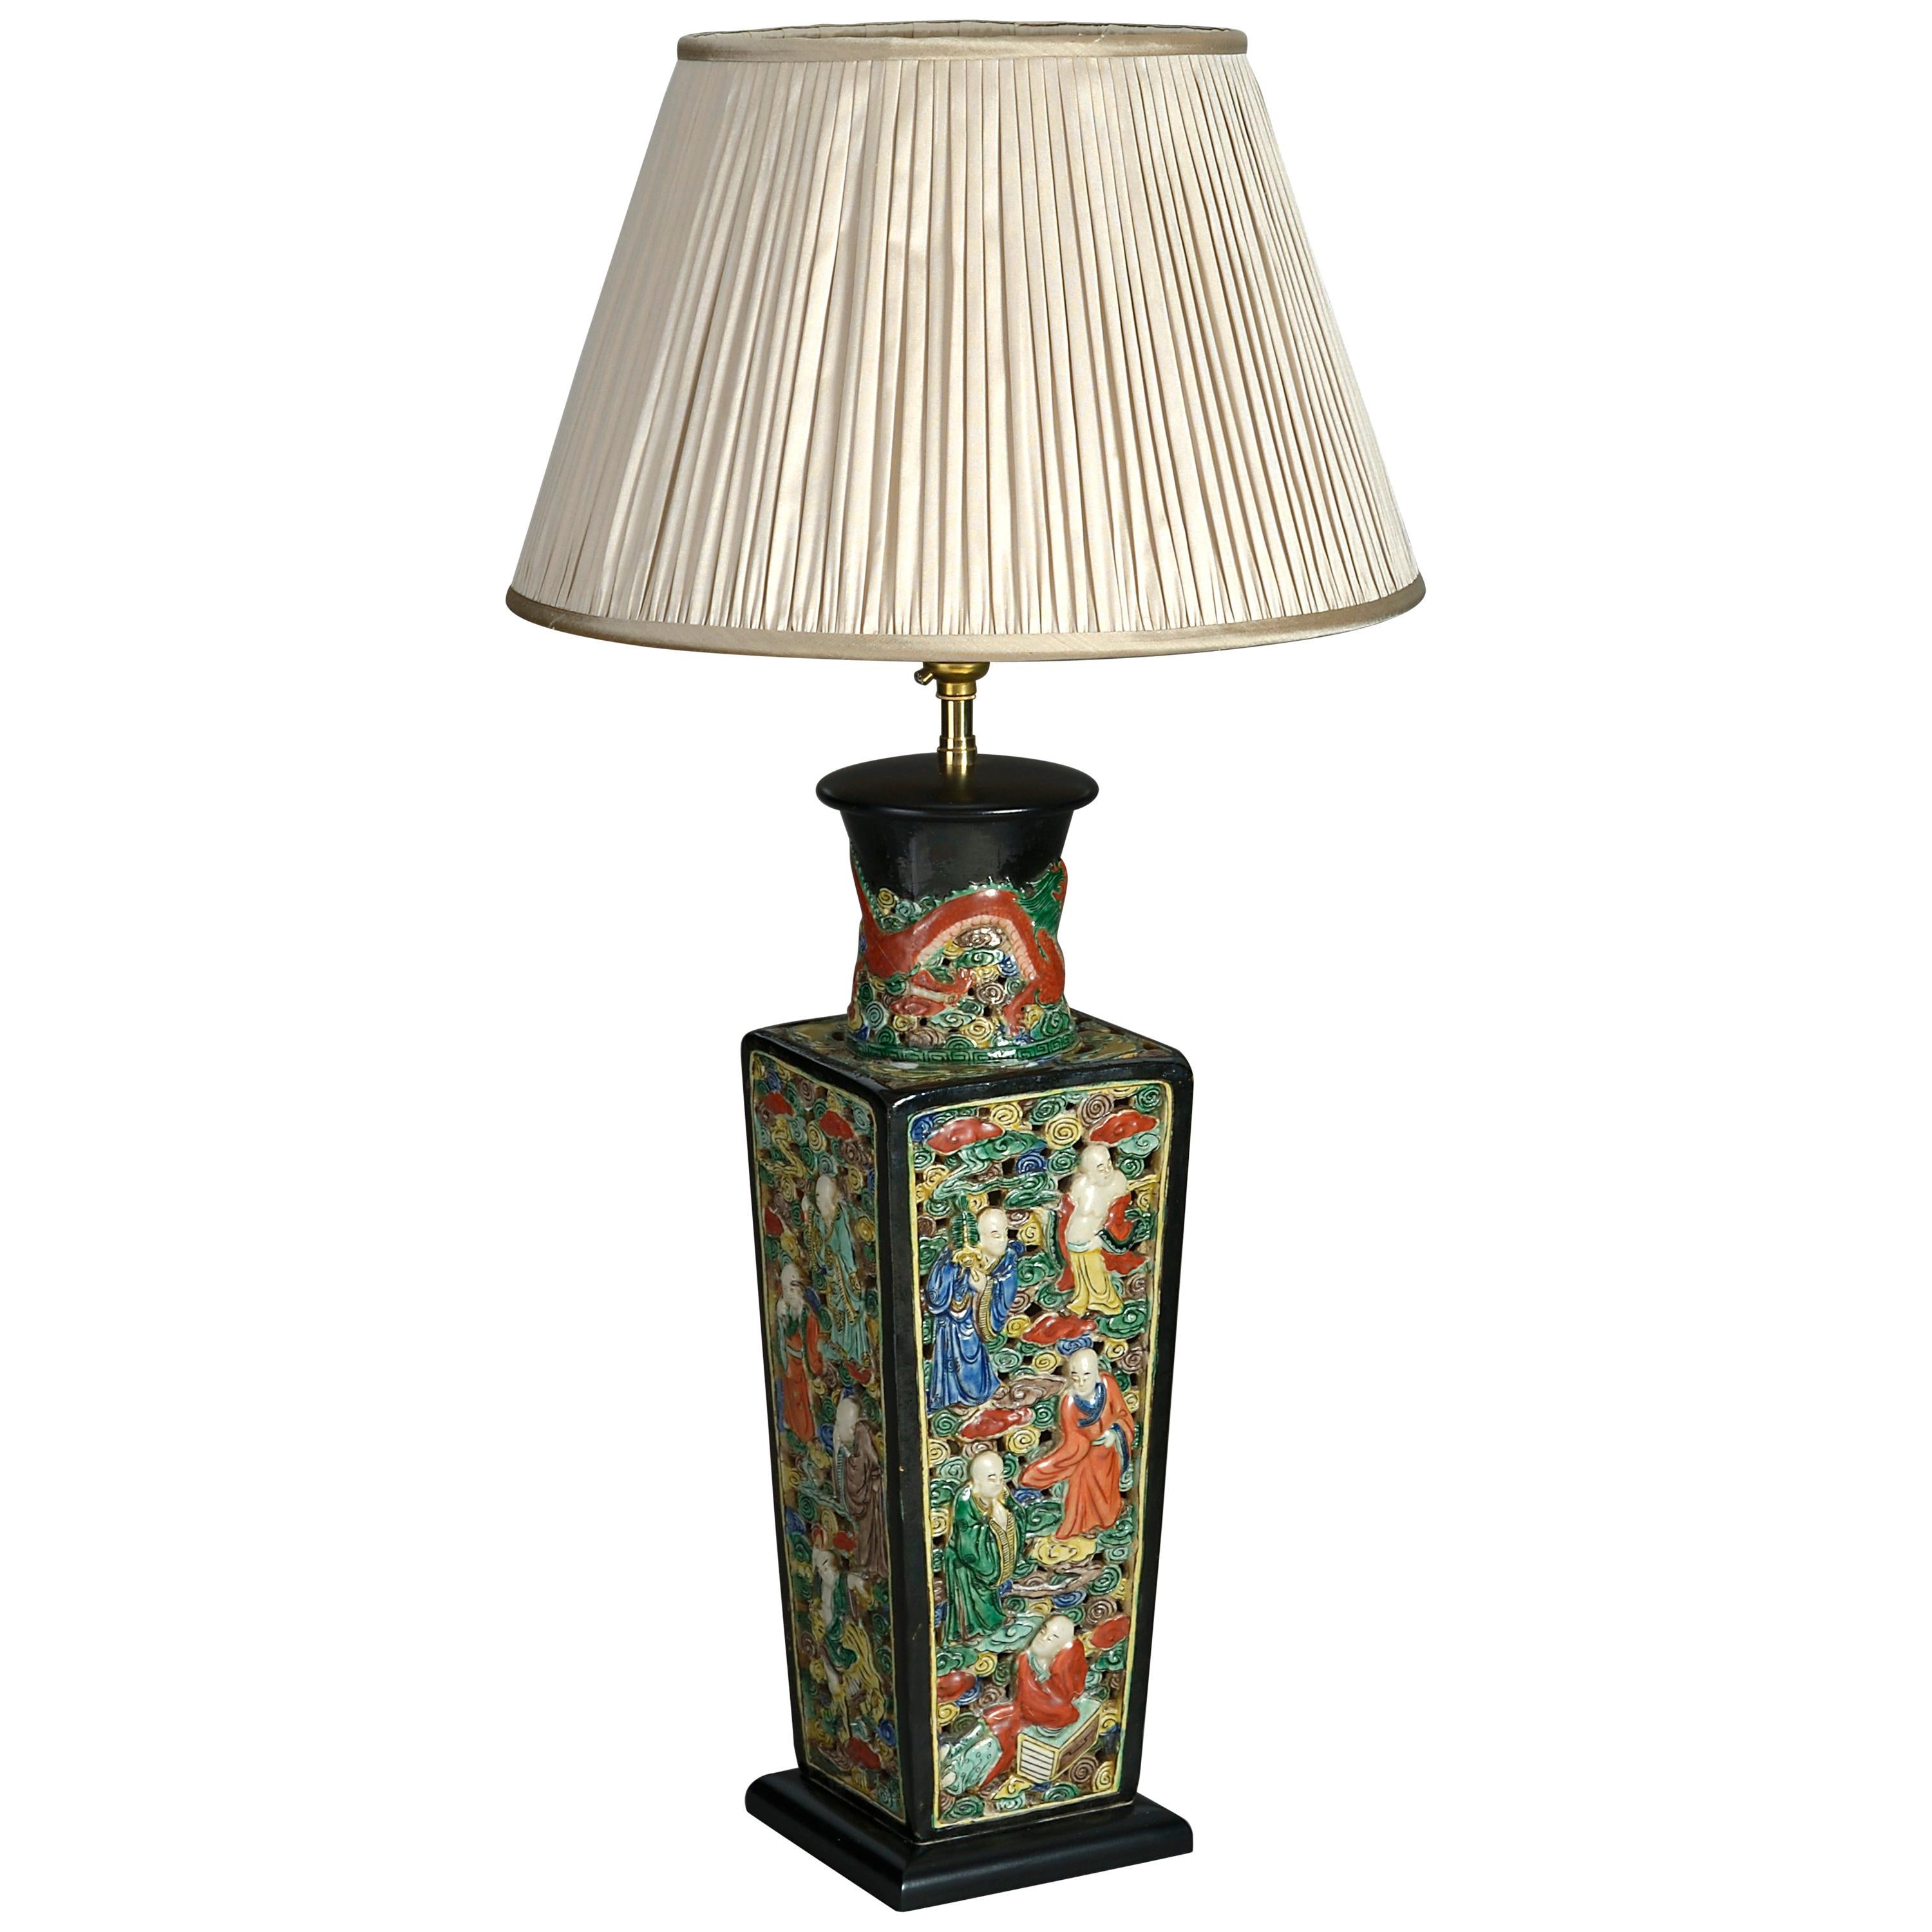 19th Century Square Porcelain Vase Lamp